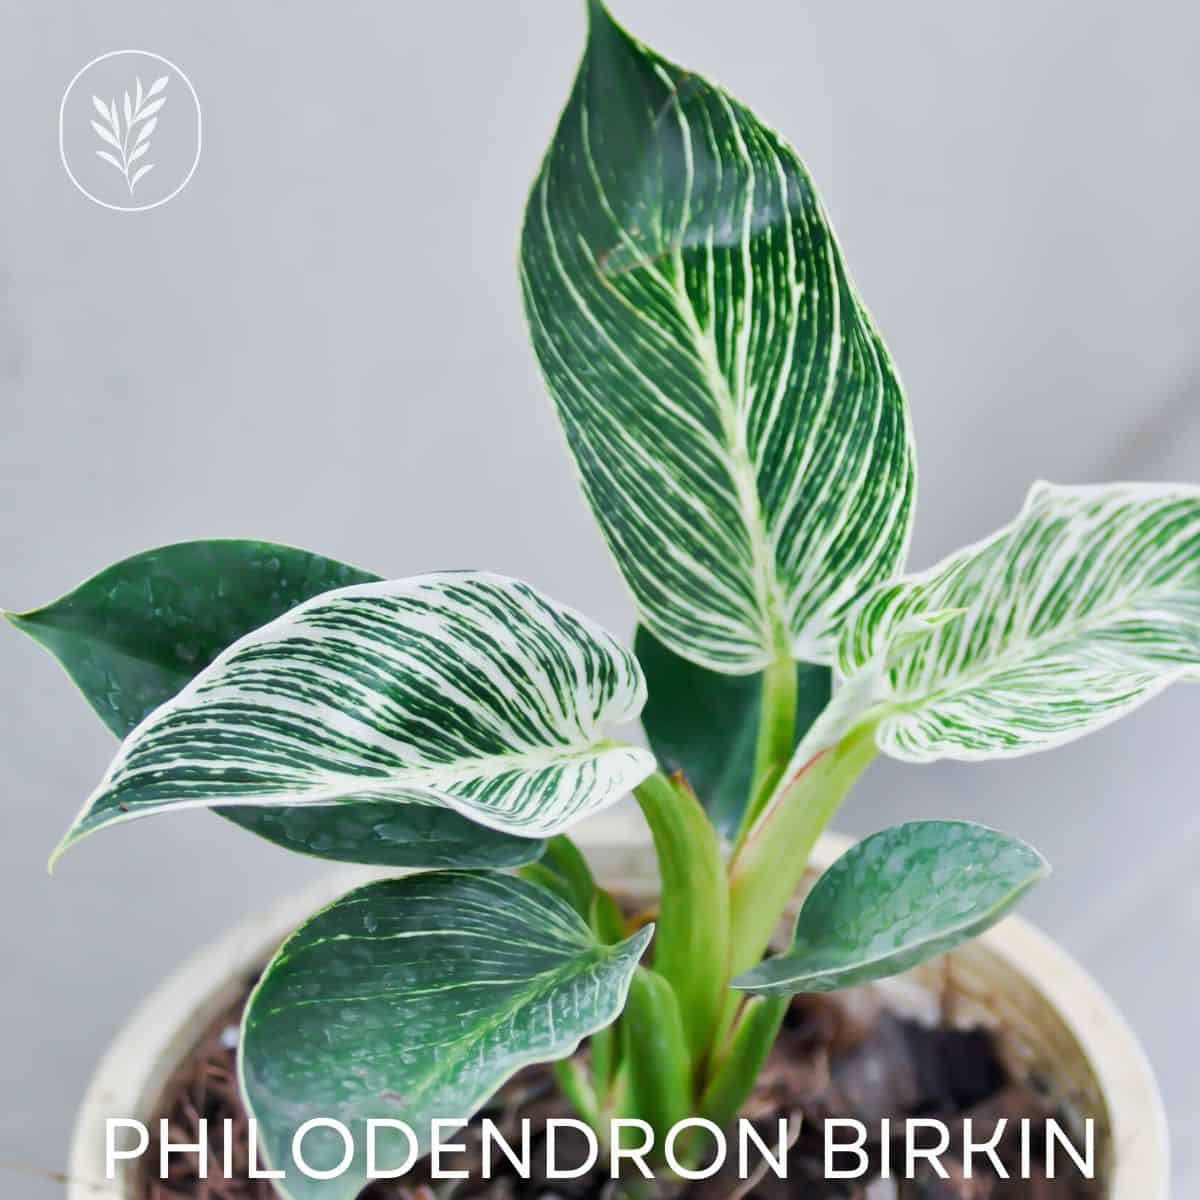 Philodendron birkin via @home4theharvest